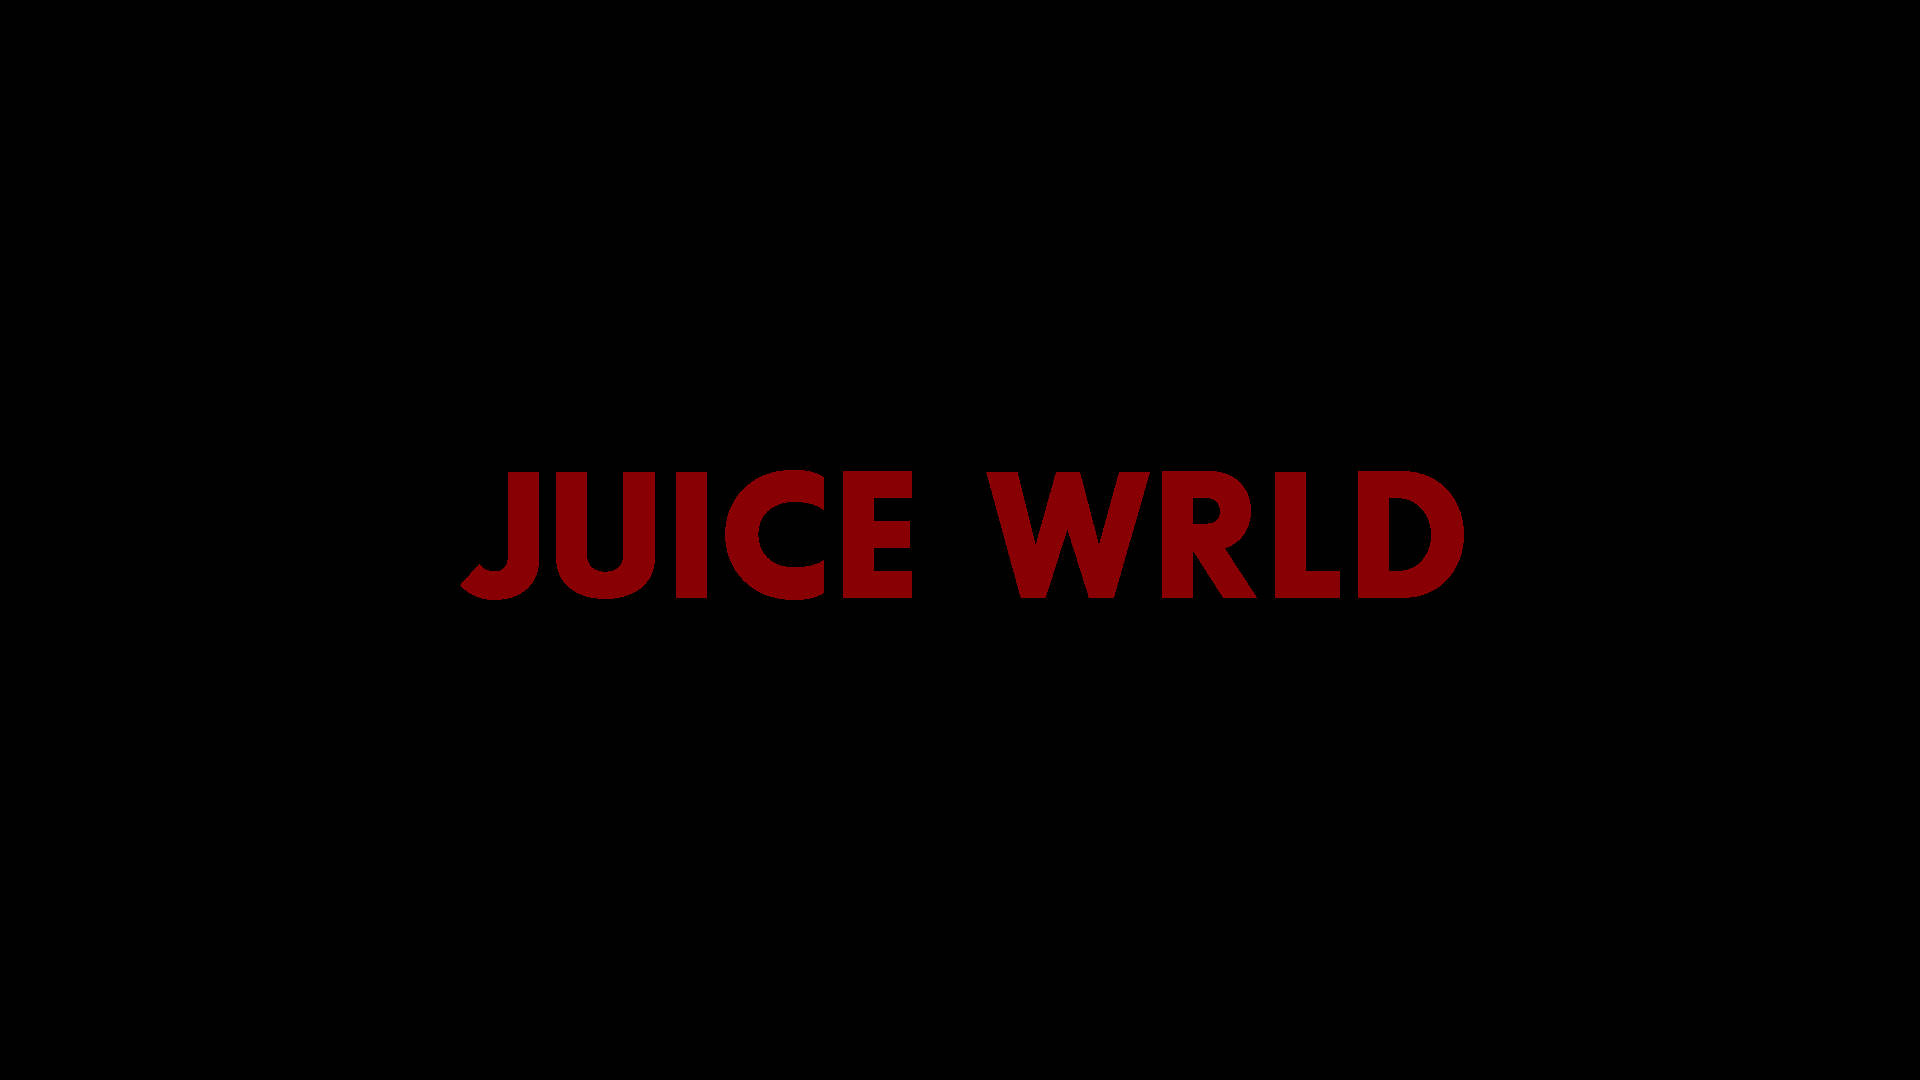 Minimalistic Juice Wrld Text Background